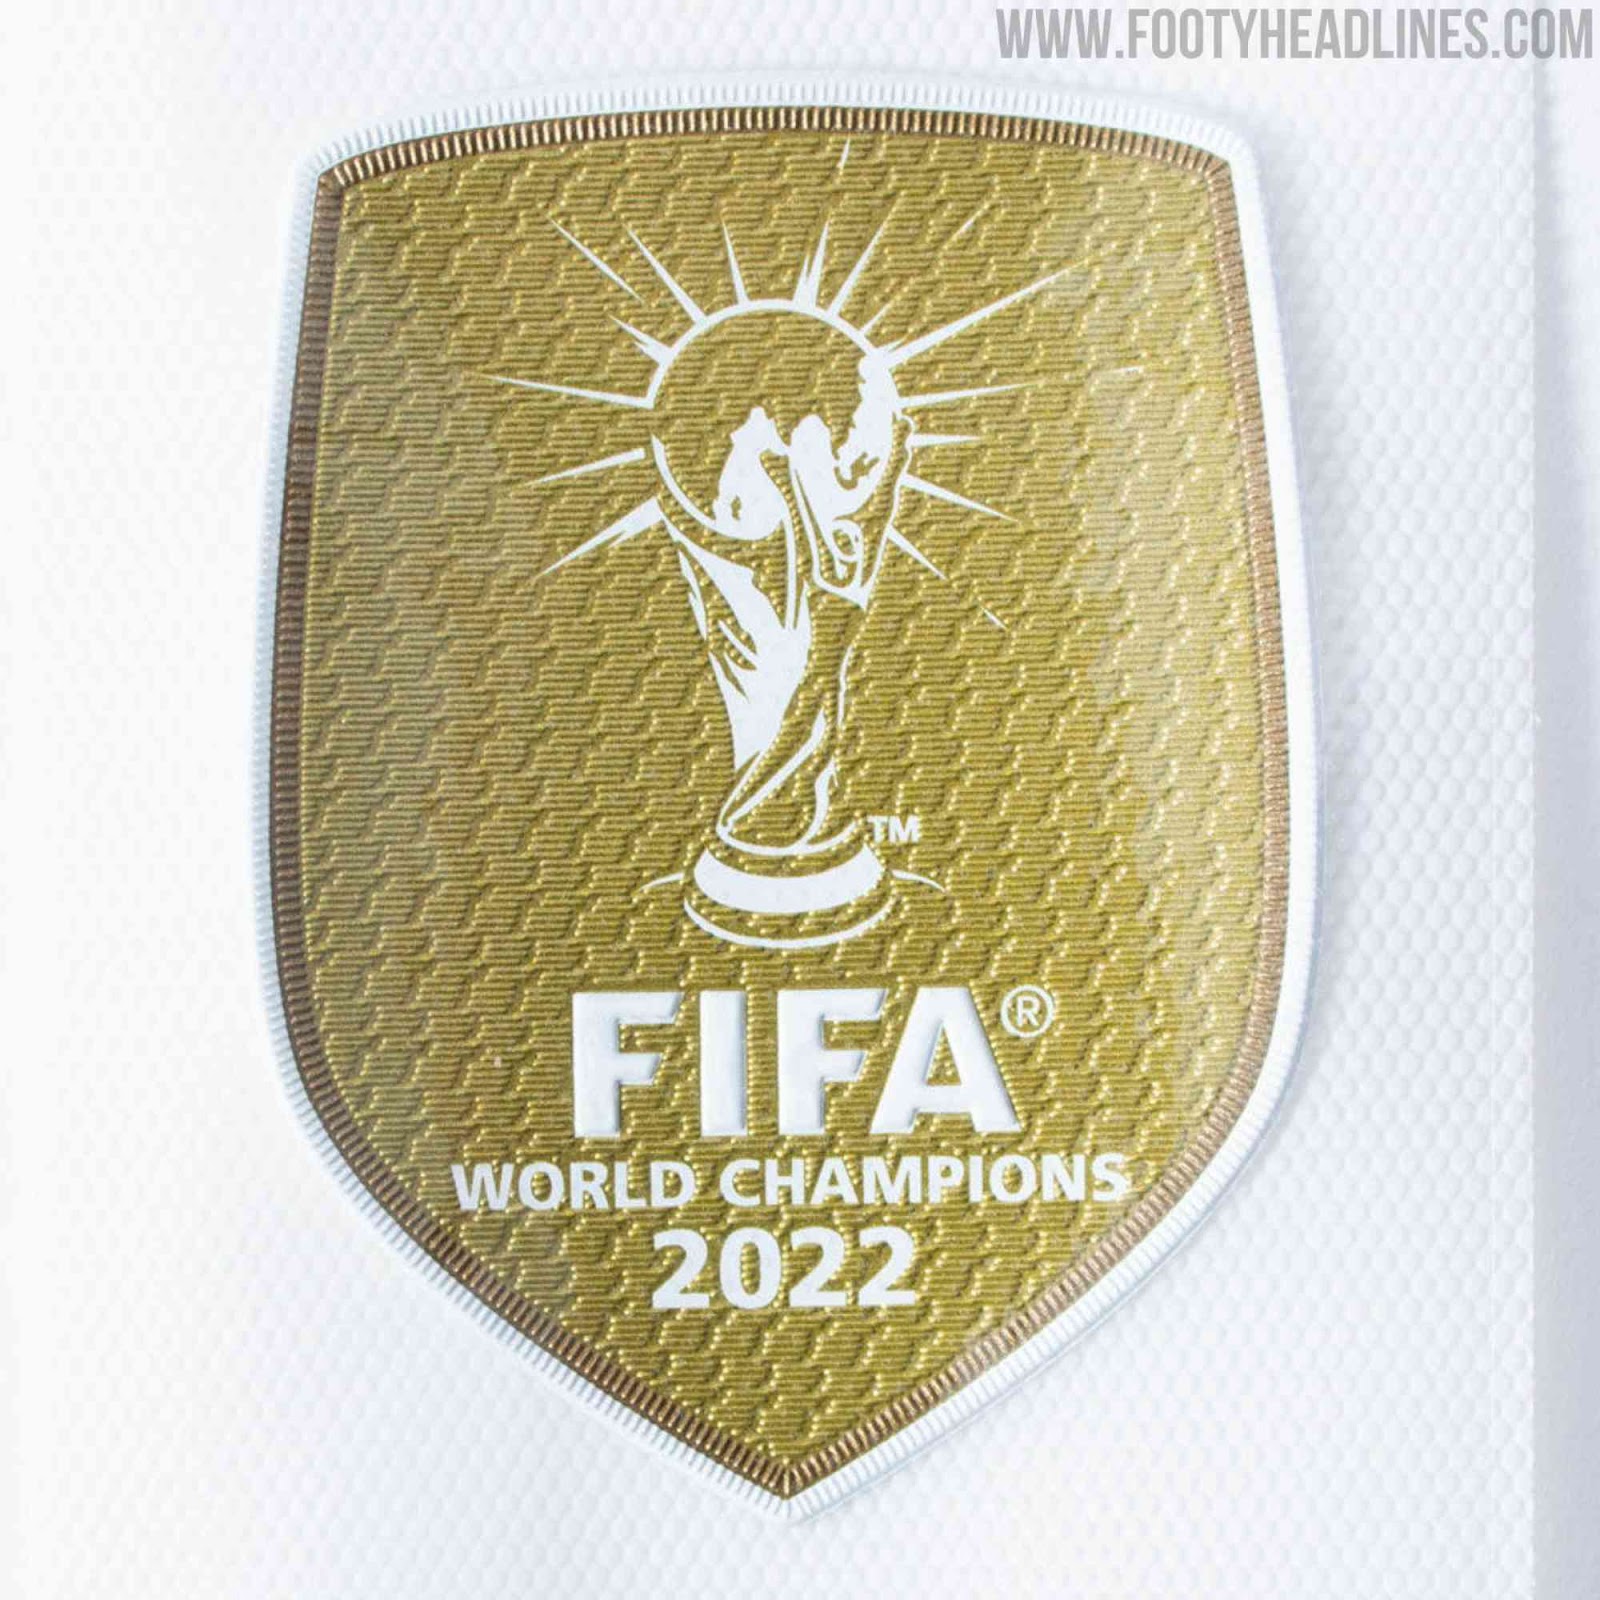 Bedrag Inspektør Øde 100% Official 2022 World Cup Winners Badge & Match Insignia Finally  Available - Footy Headlines